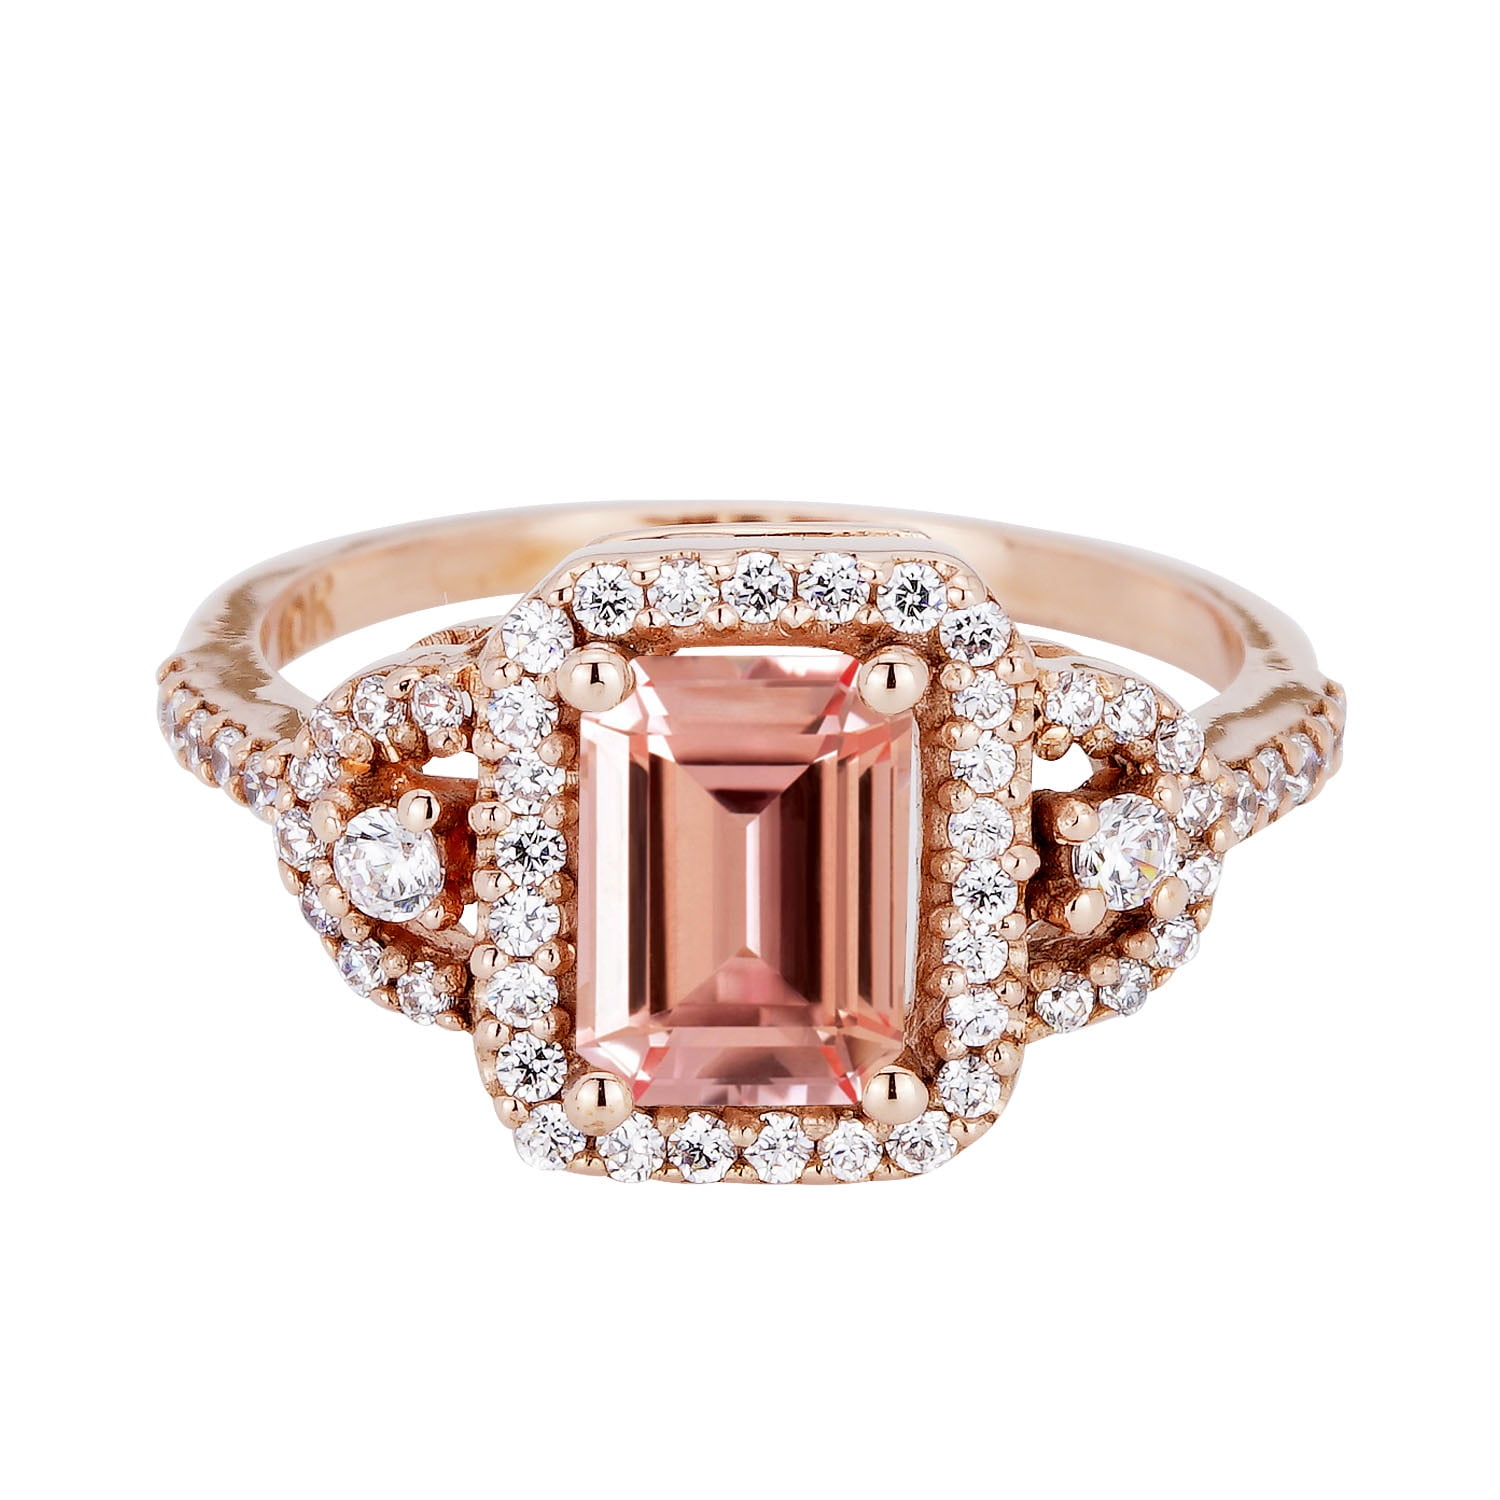 JeenJewels - 1.50 carat Emerald Cut Morganite Bridal Wedding Ring in ...